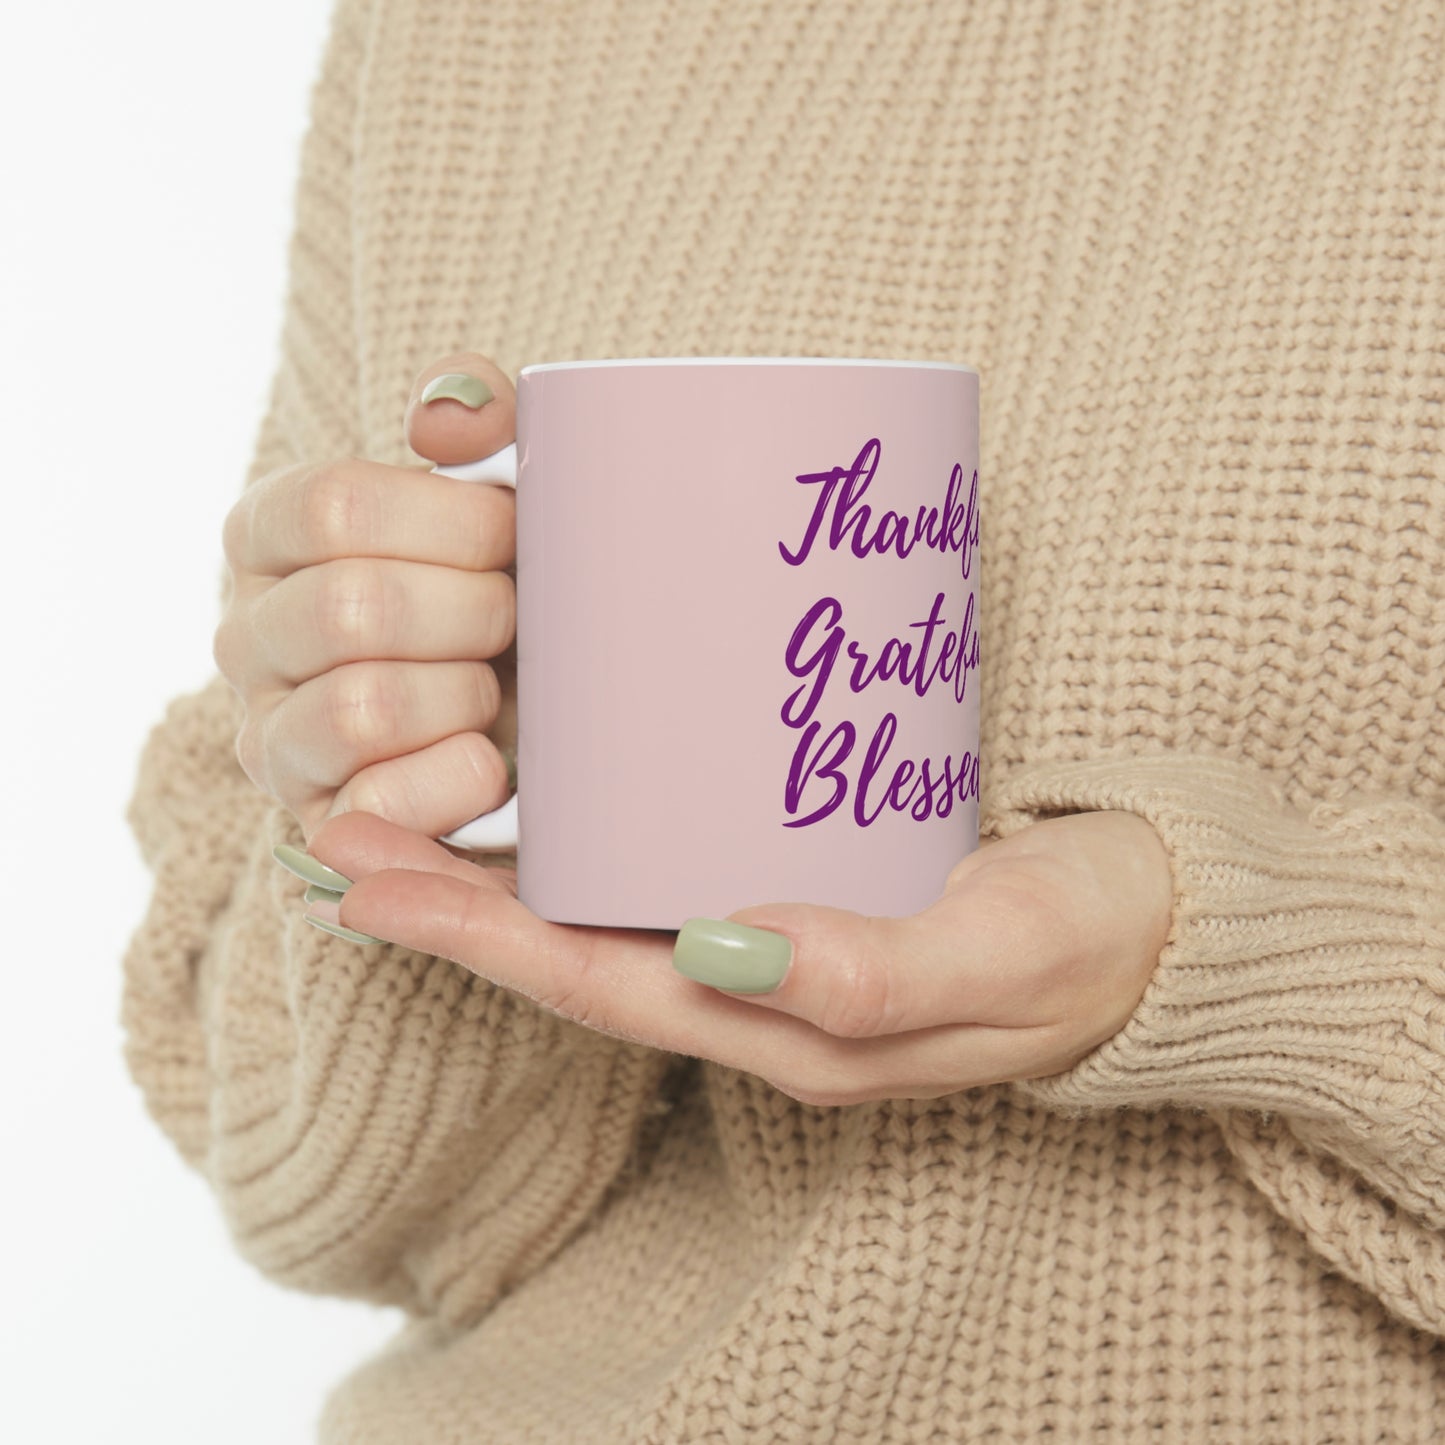 Thankful Grateful Blessed - Christian Coffee Mug 11oz